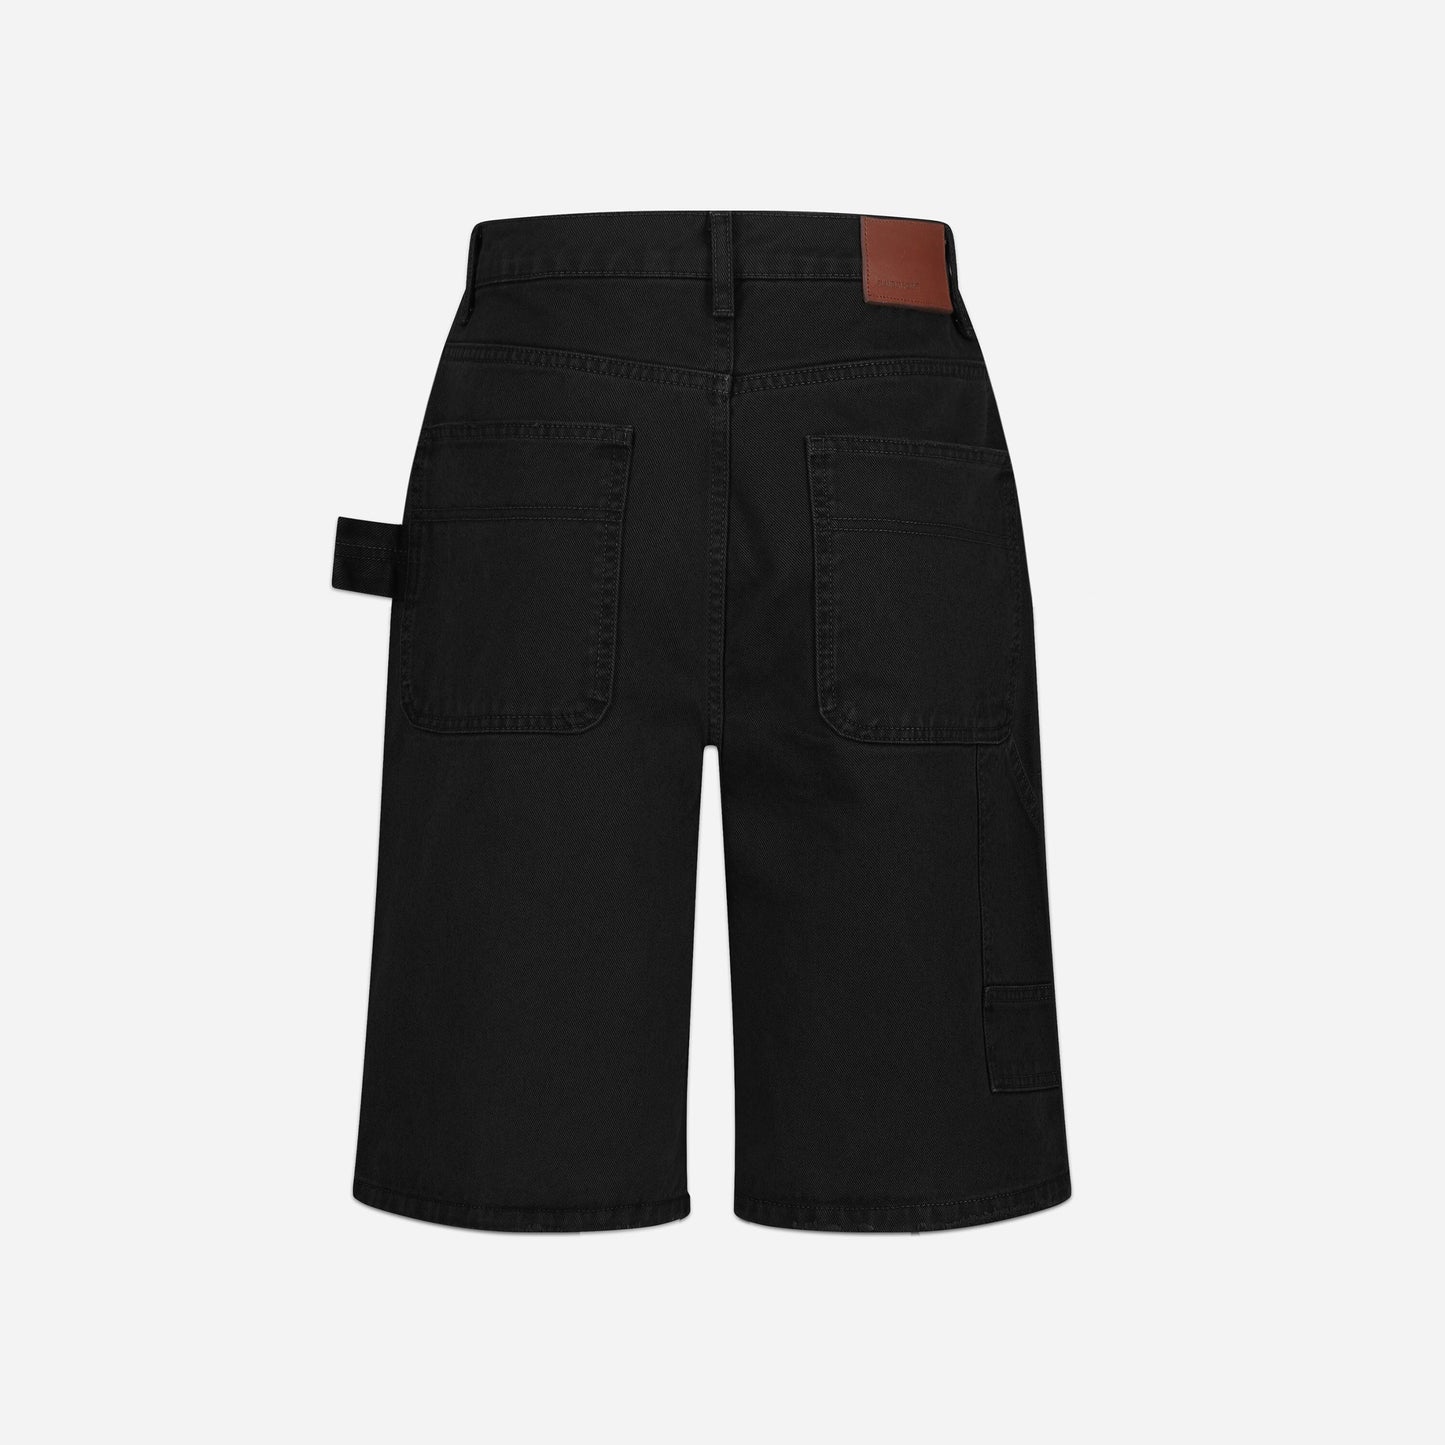 Carpenter Short Jeans in Black Denim